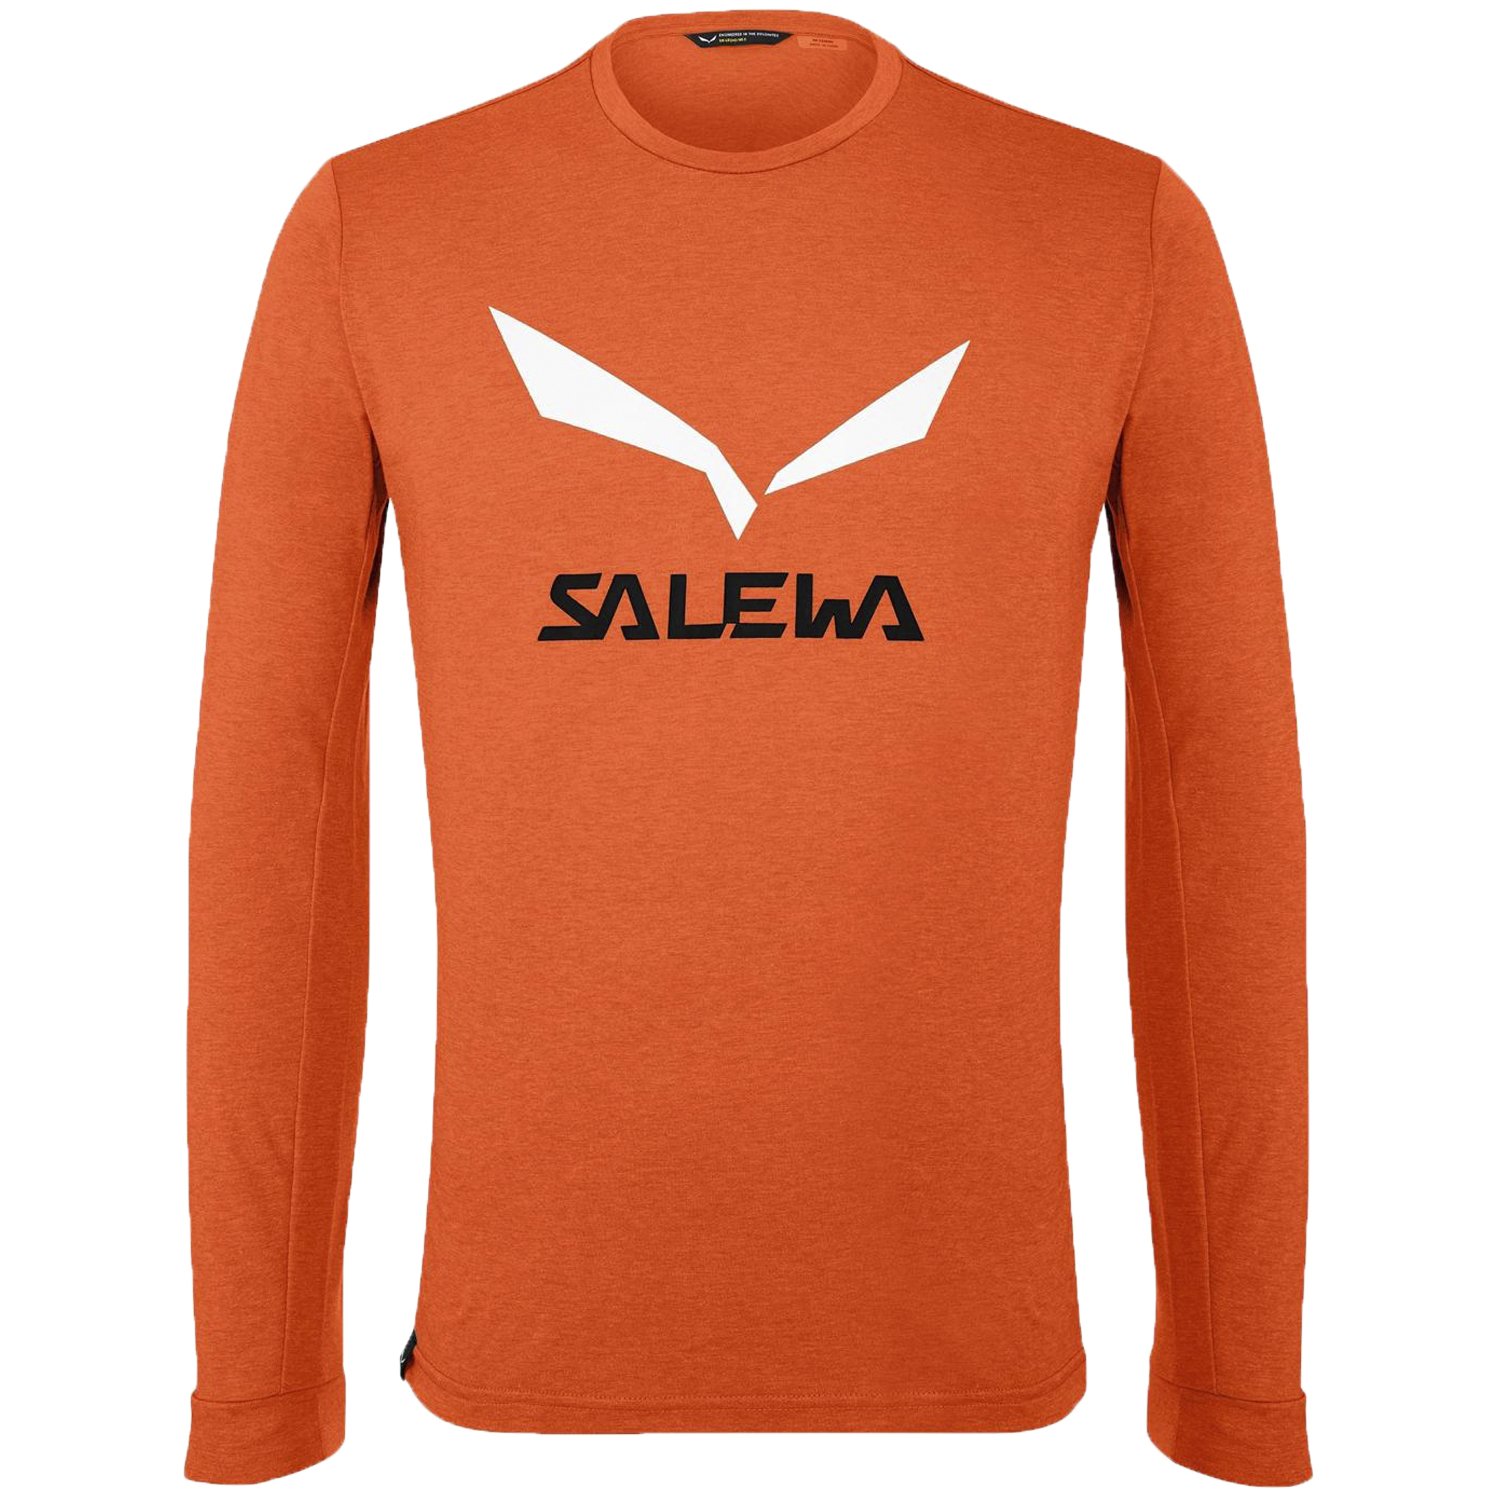 Футболка Salewa Solidlogo Dry Men's L/S Tee Red Orange Melange, с длинным рукавом, мужская, 00-0000027340_4156 mjolk футболка с длинным рукавом лисички